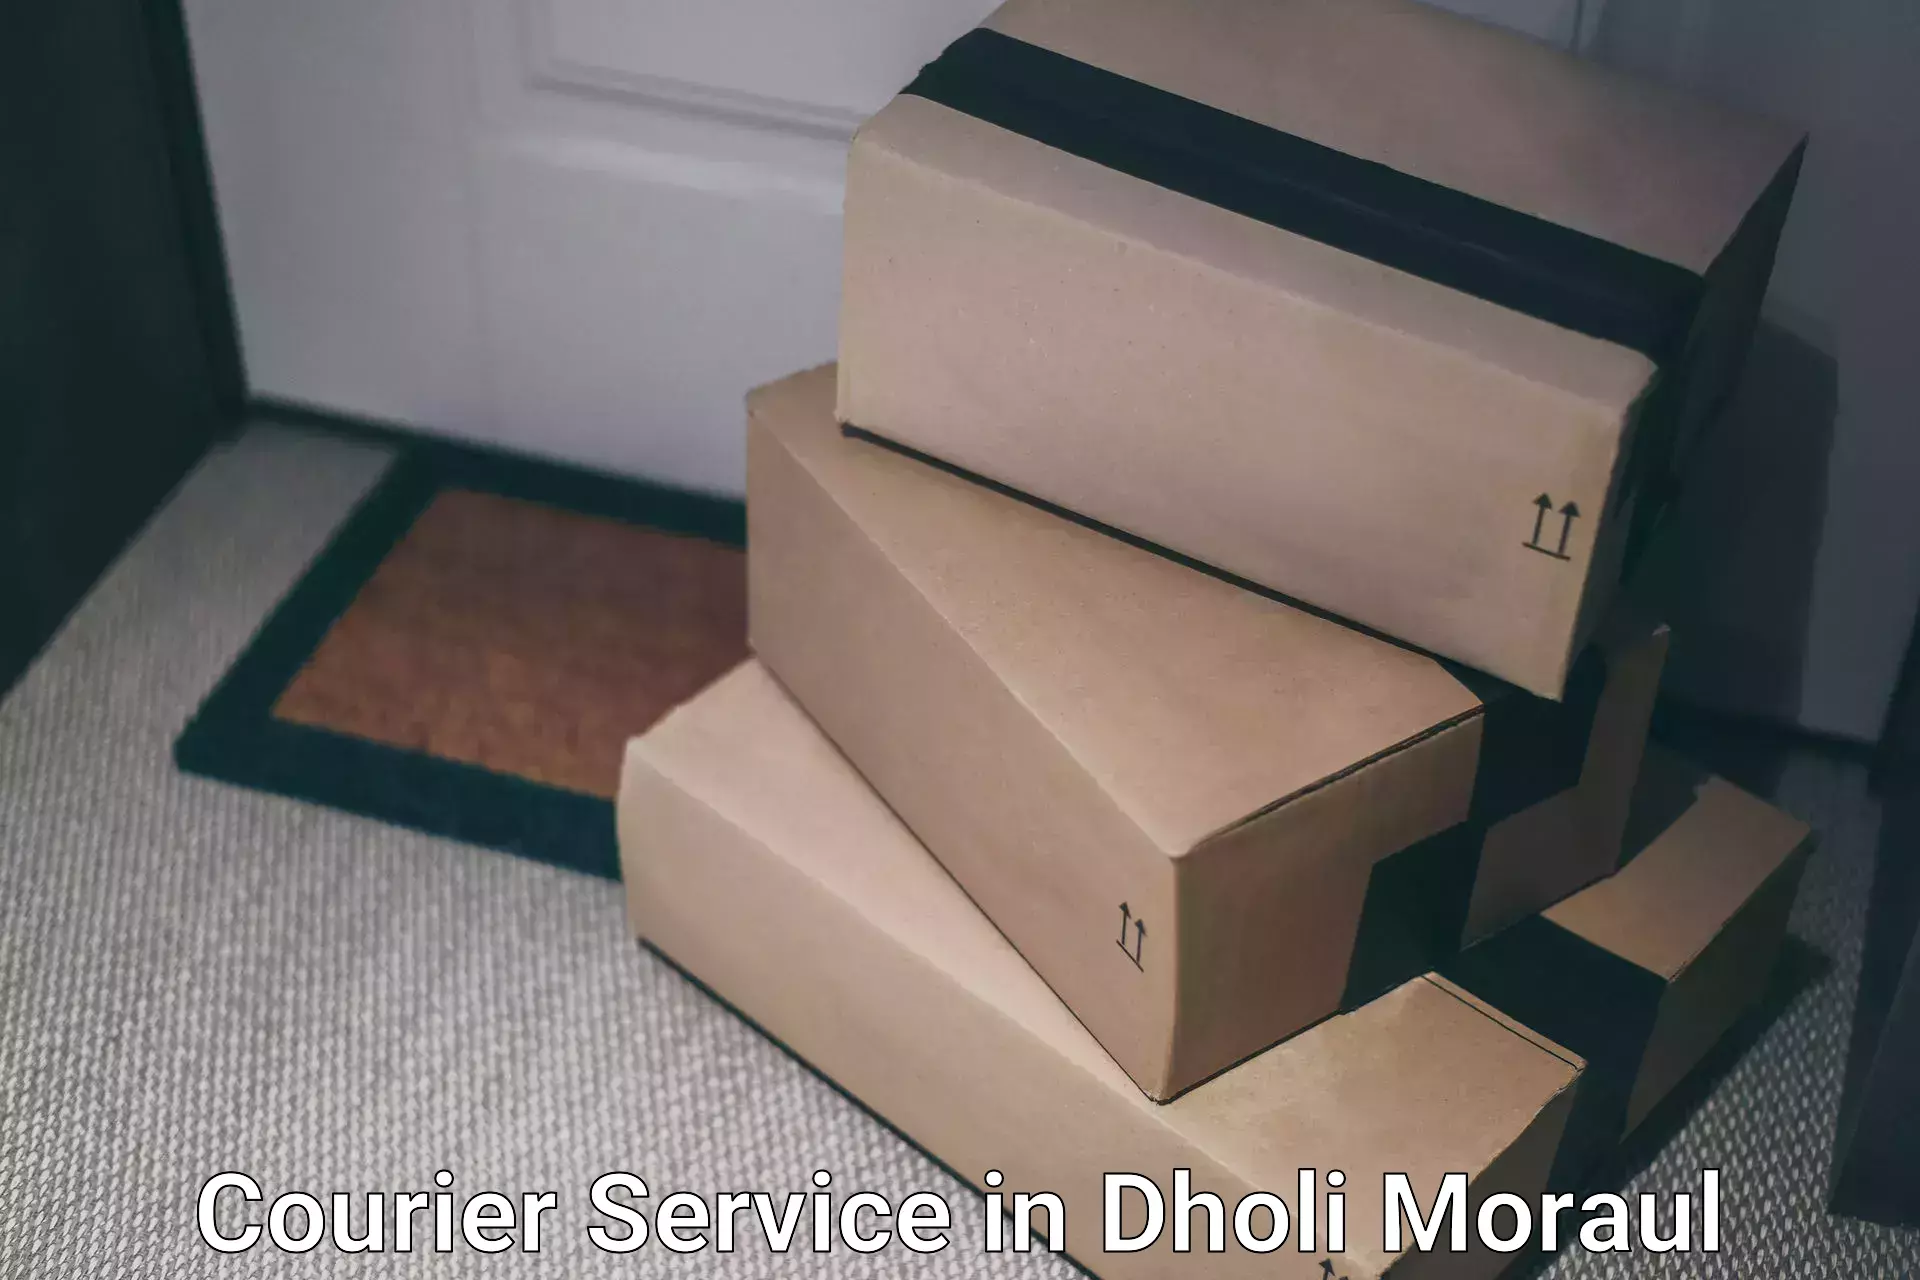 Logistics solutions in Dholi Moraul